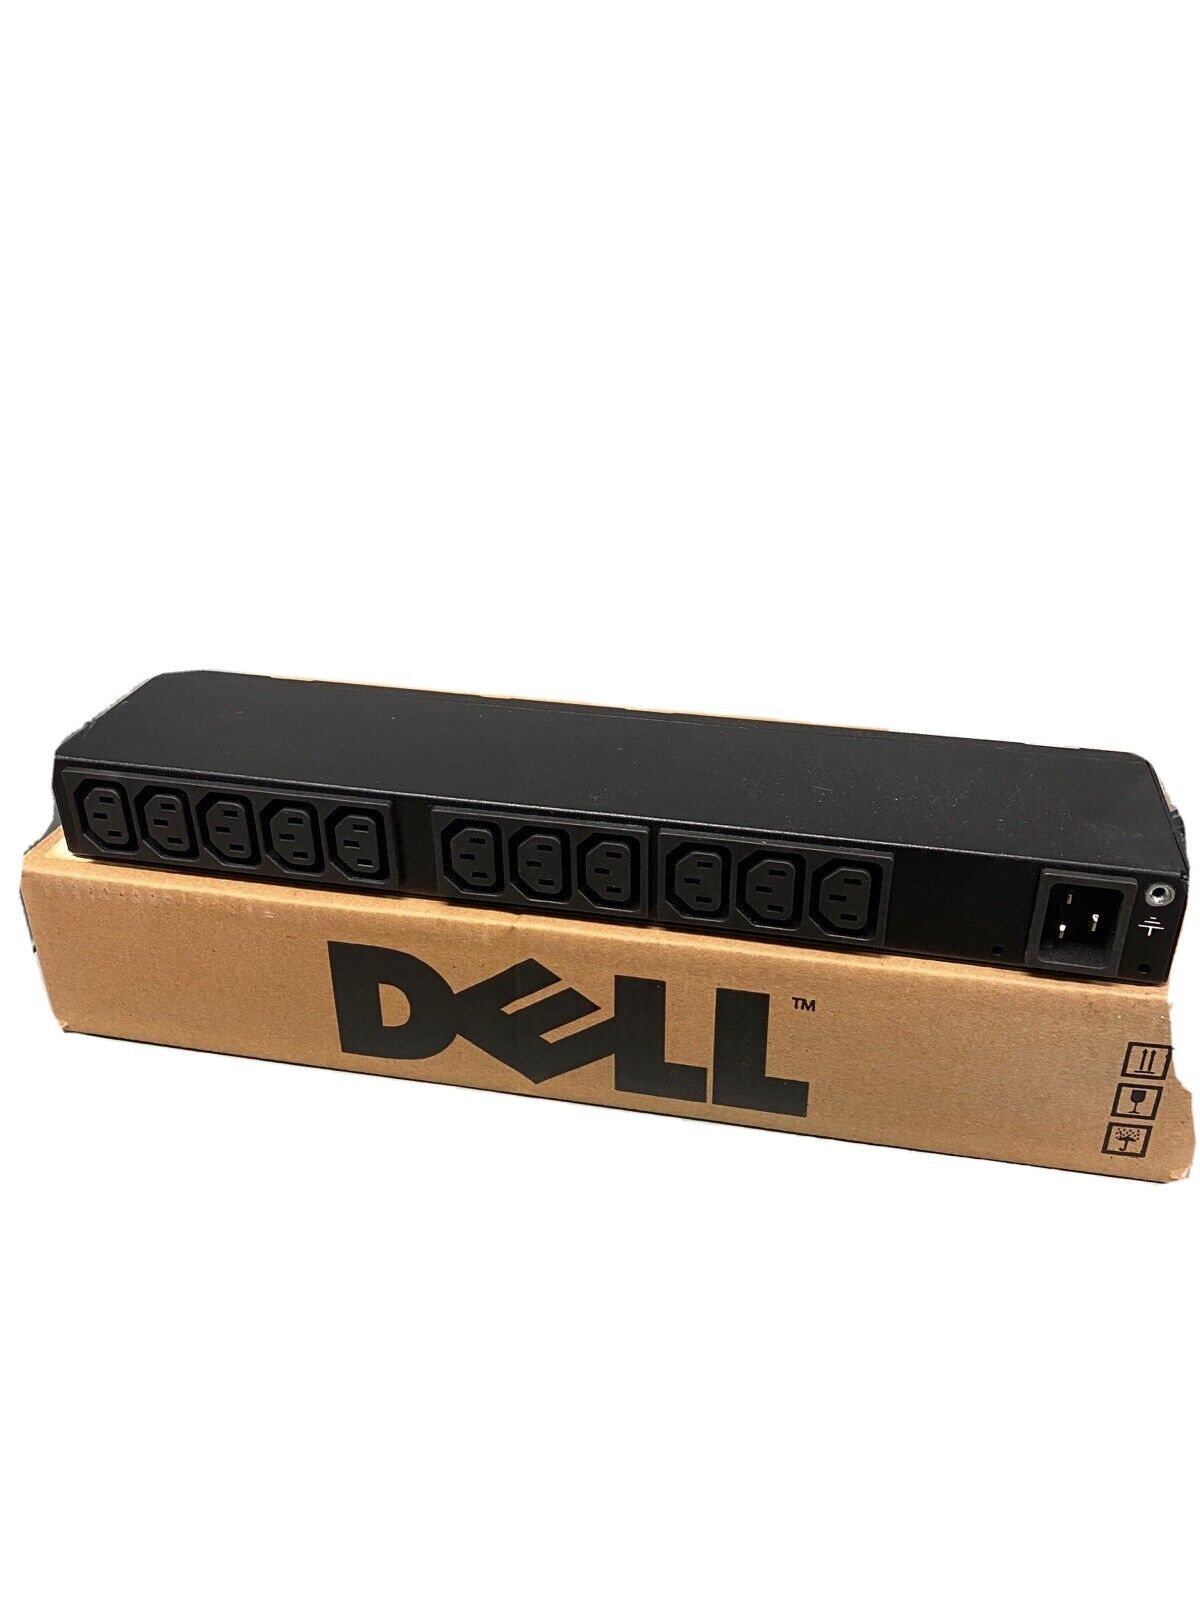 Dell 6020 Rack Mountable Power Distribution Unit Surge Part K558N No Power Cord